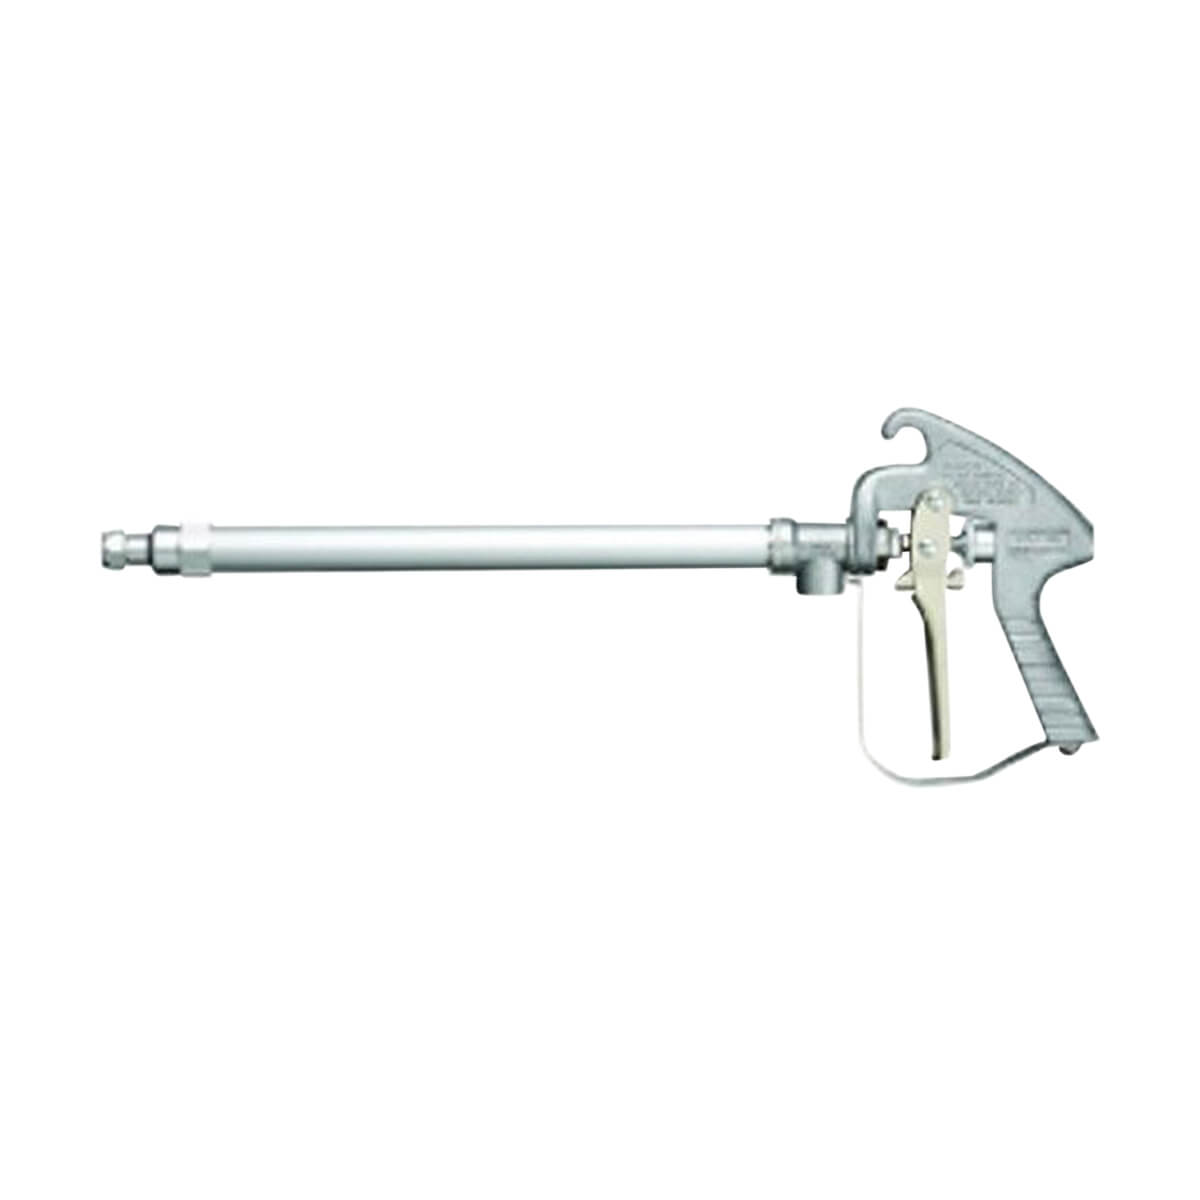 22-in GunJet Spray Gun